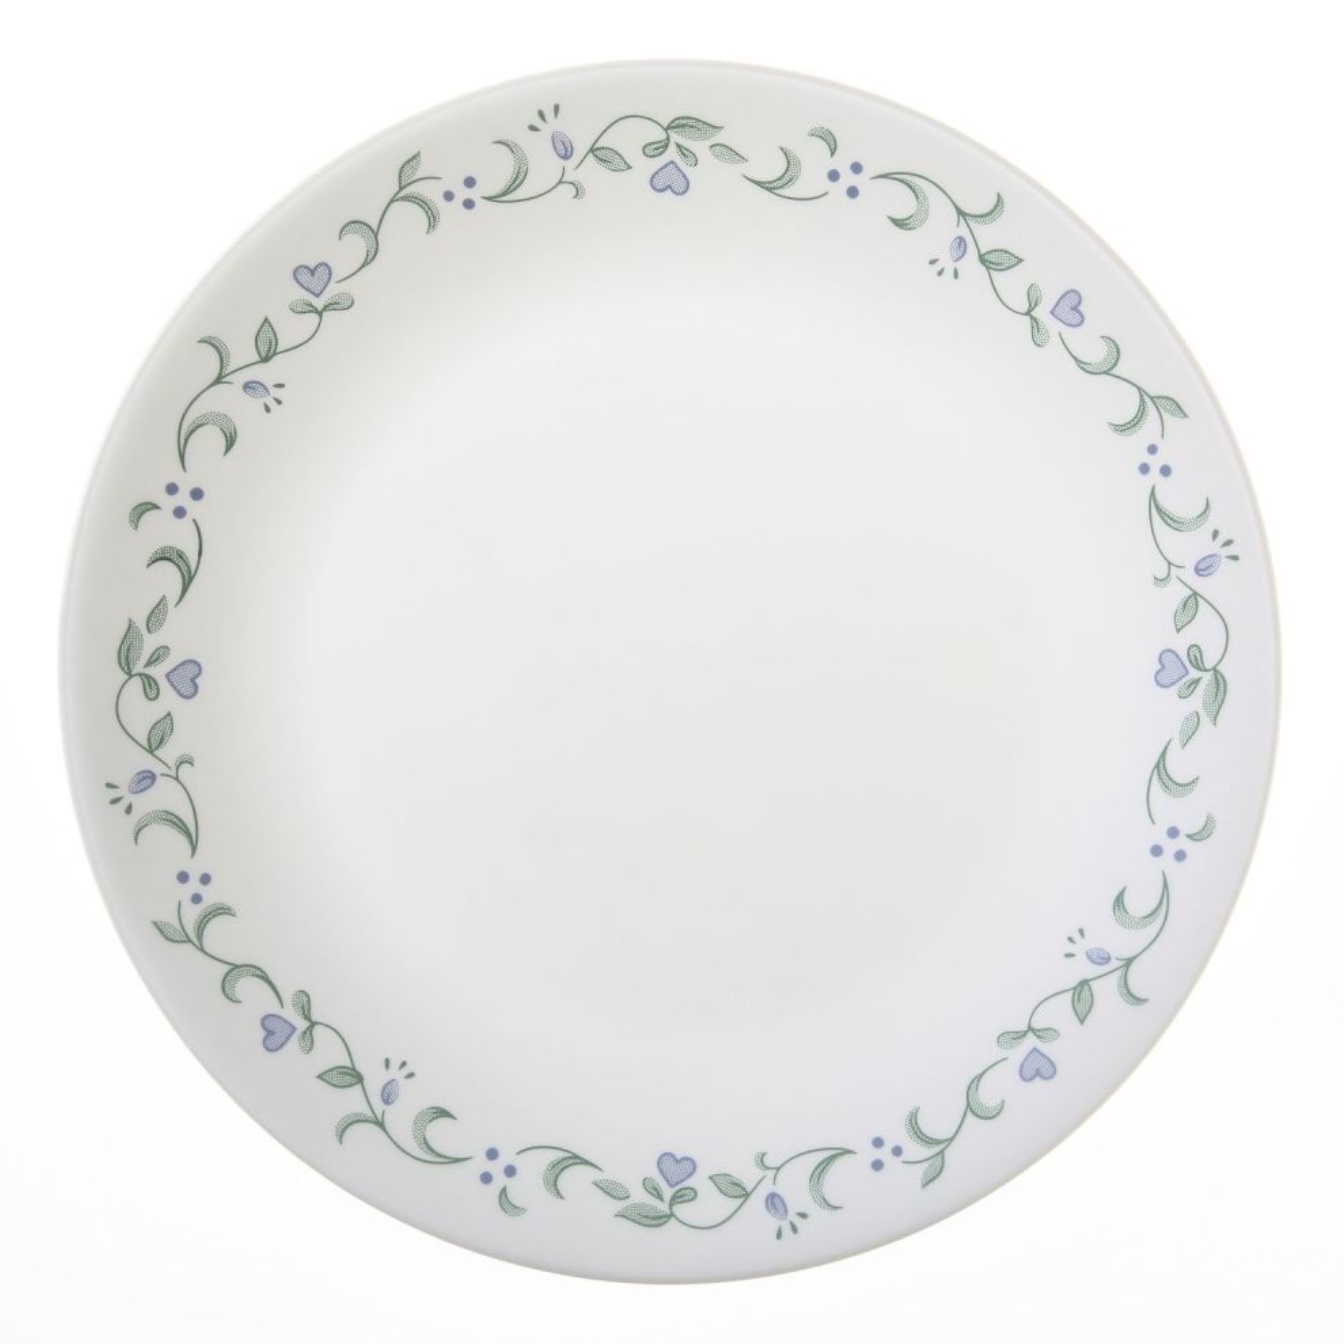 Тарелка обеденная Corelle 26 см тарелка обеденная стеклокерамика 26 см квадратная токио daniks ffp 115 k1306 2 nfp110t